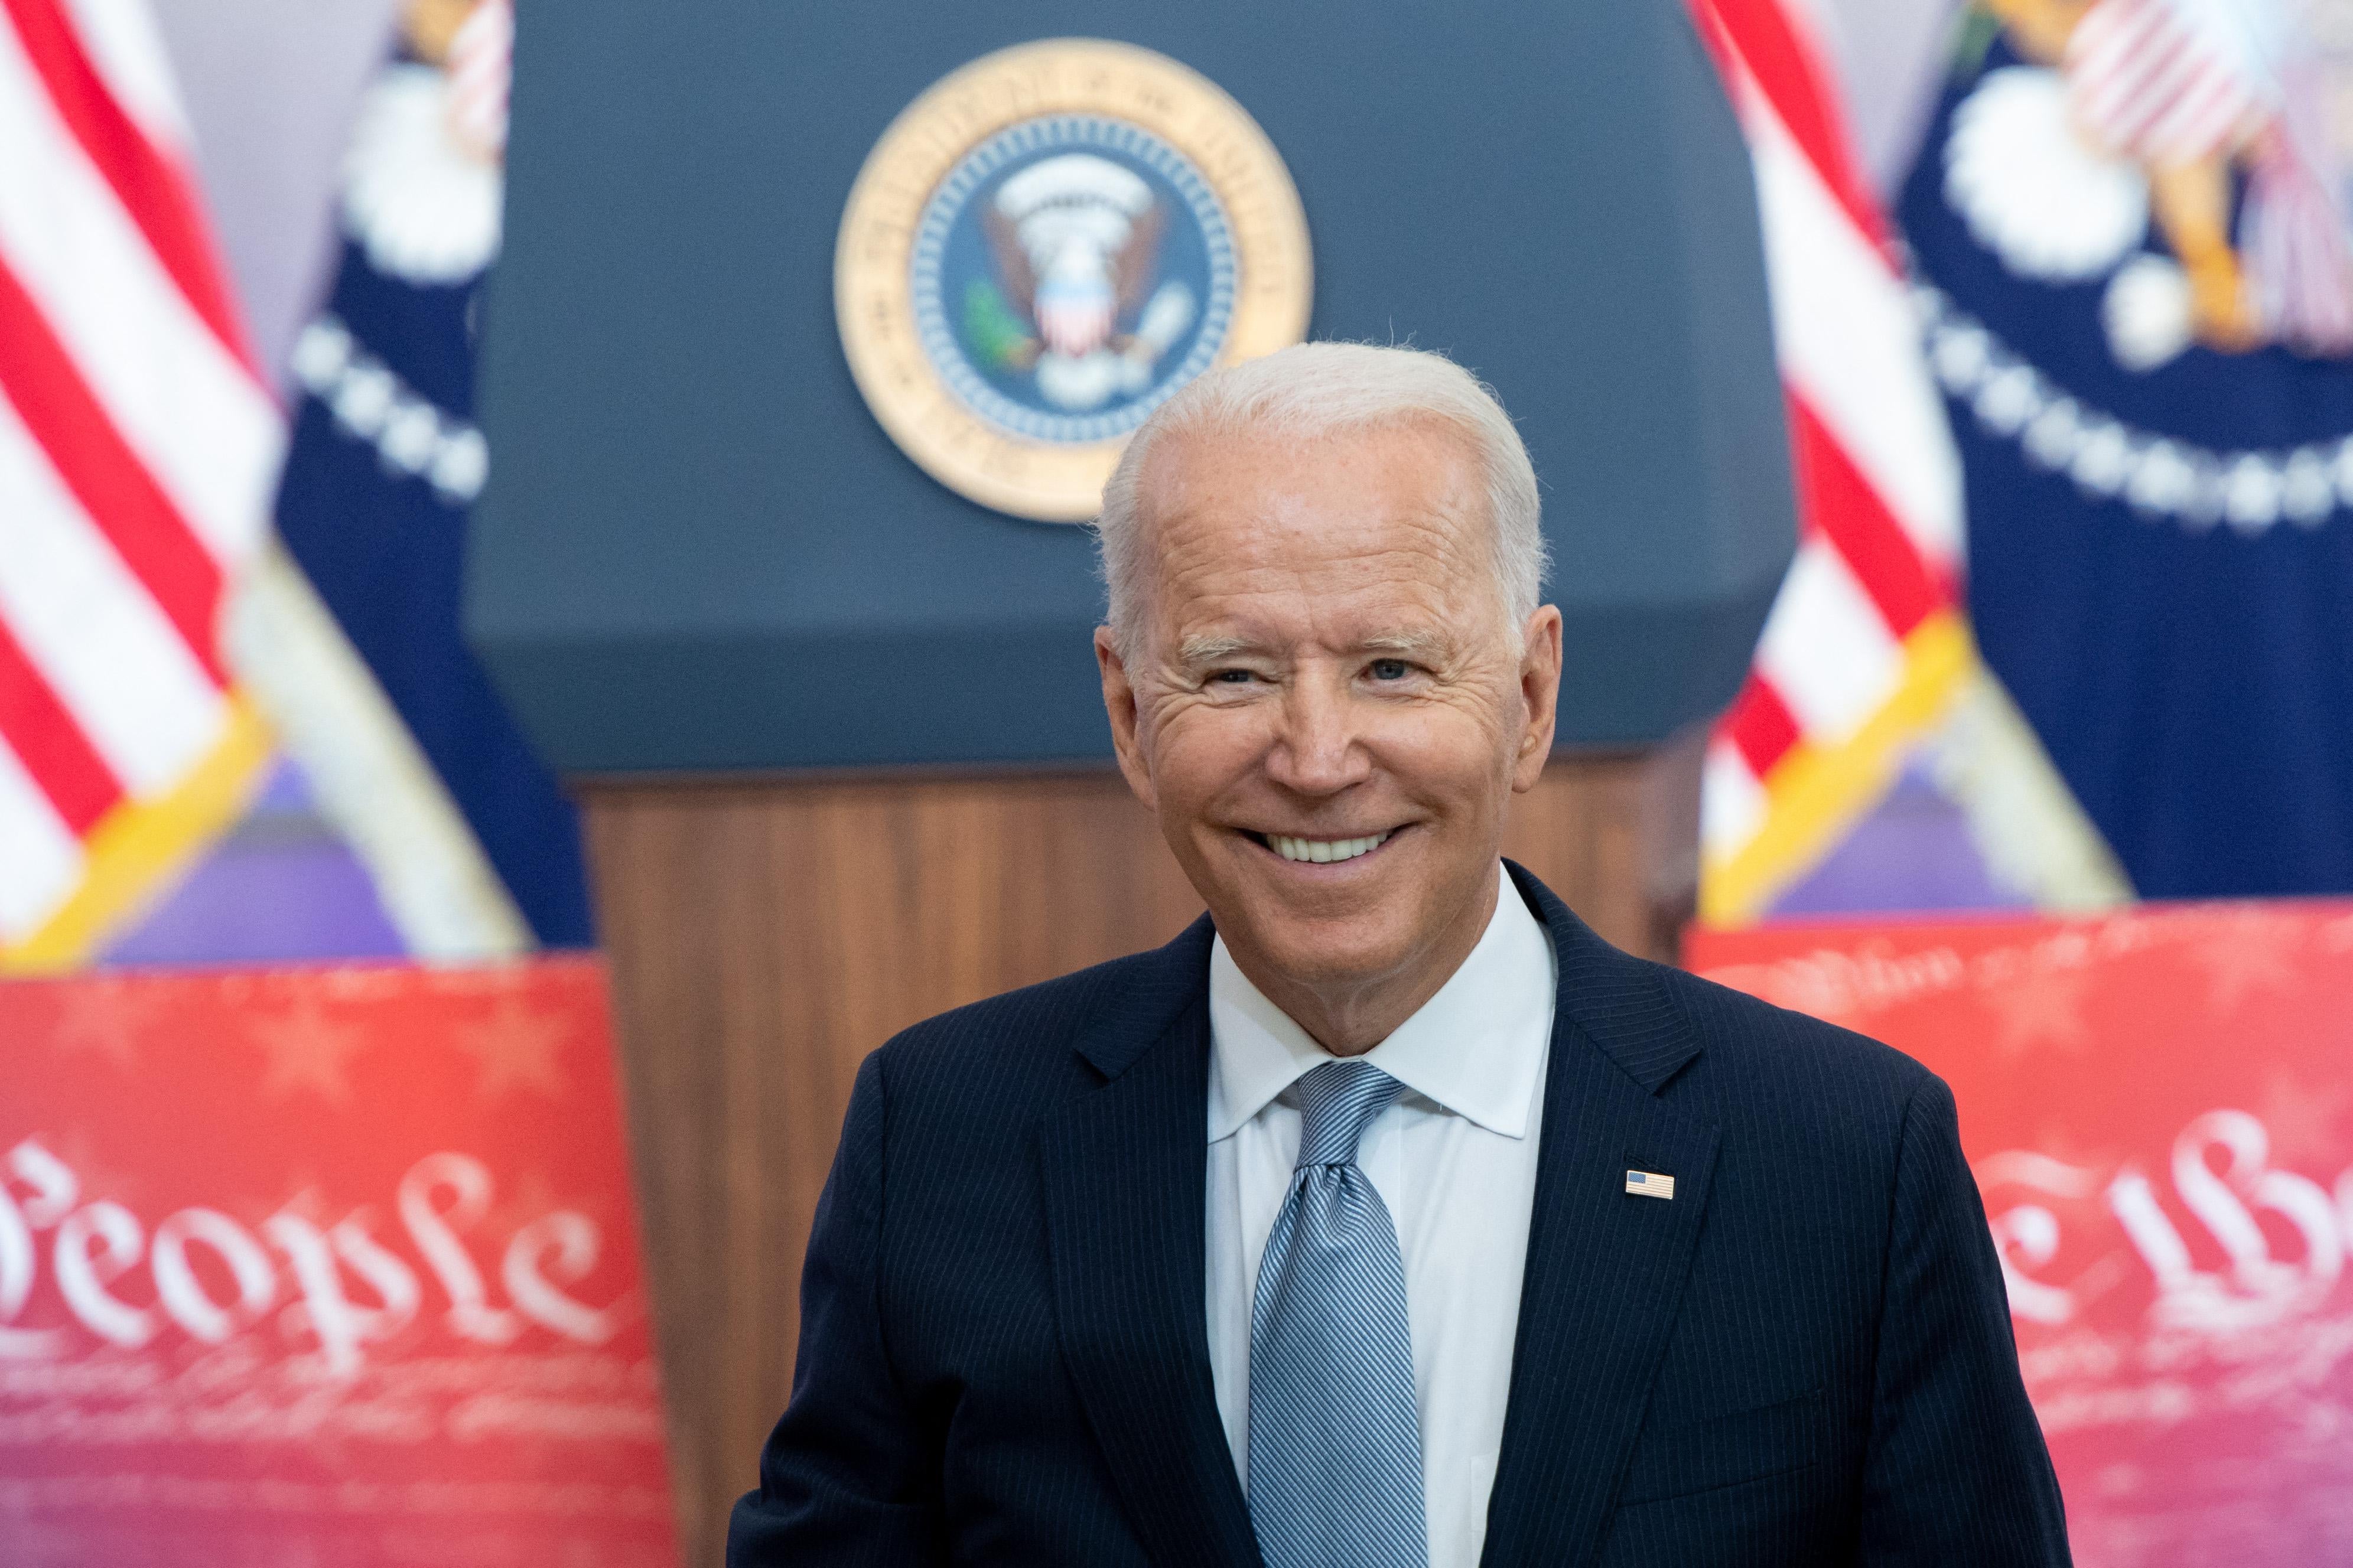 Joe Biden smiling.